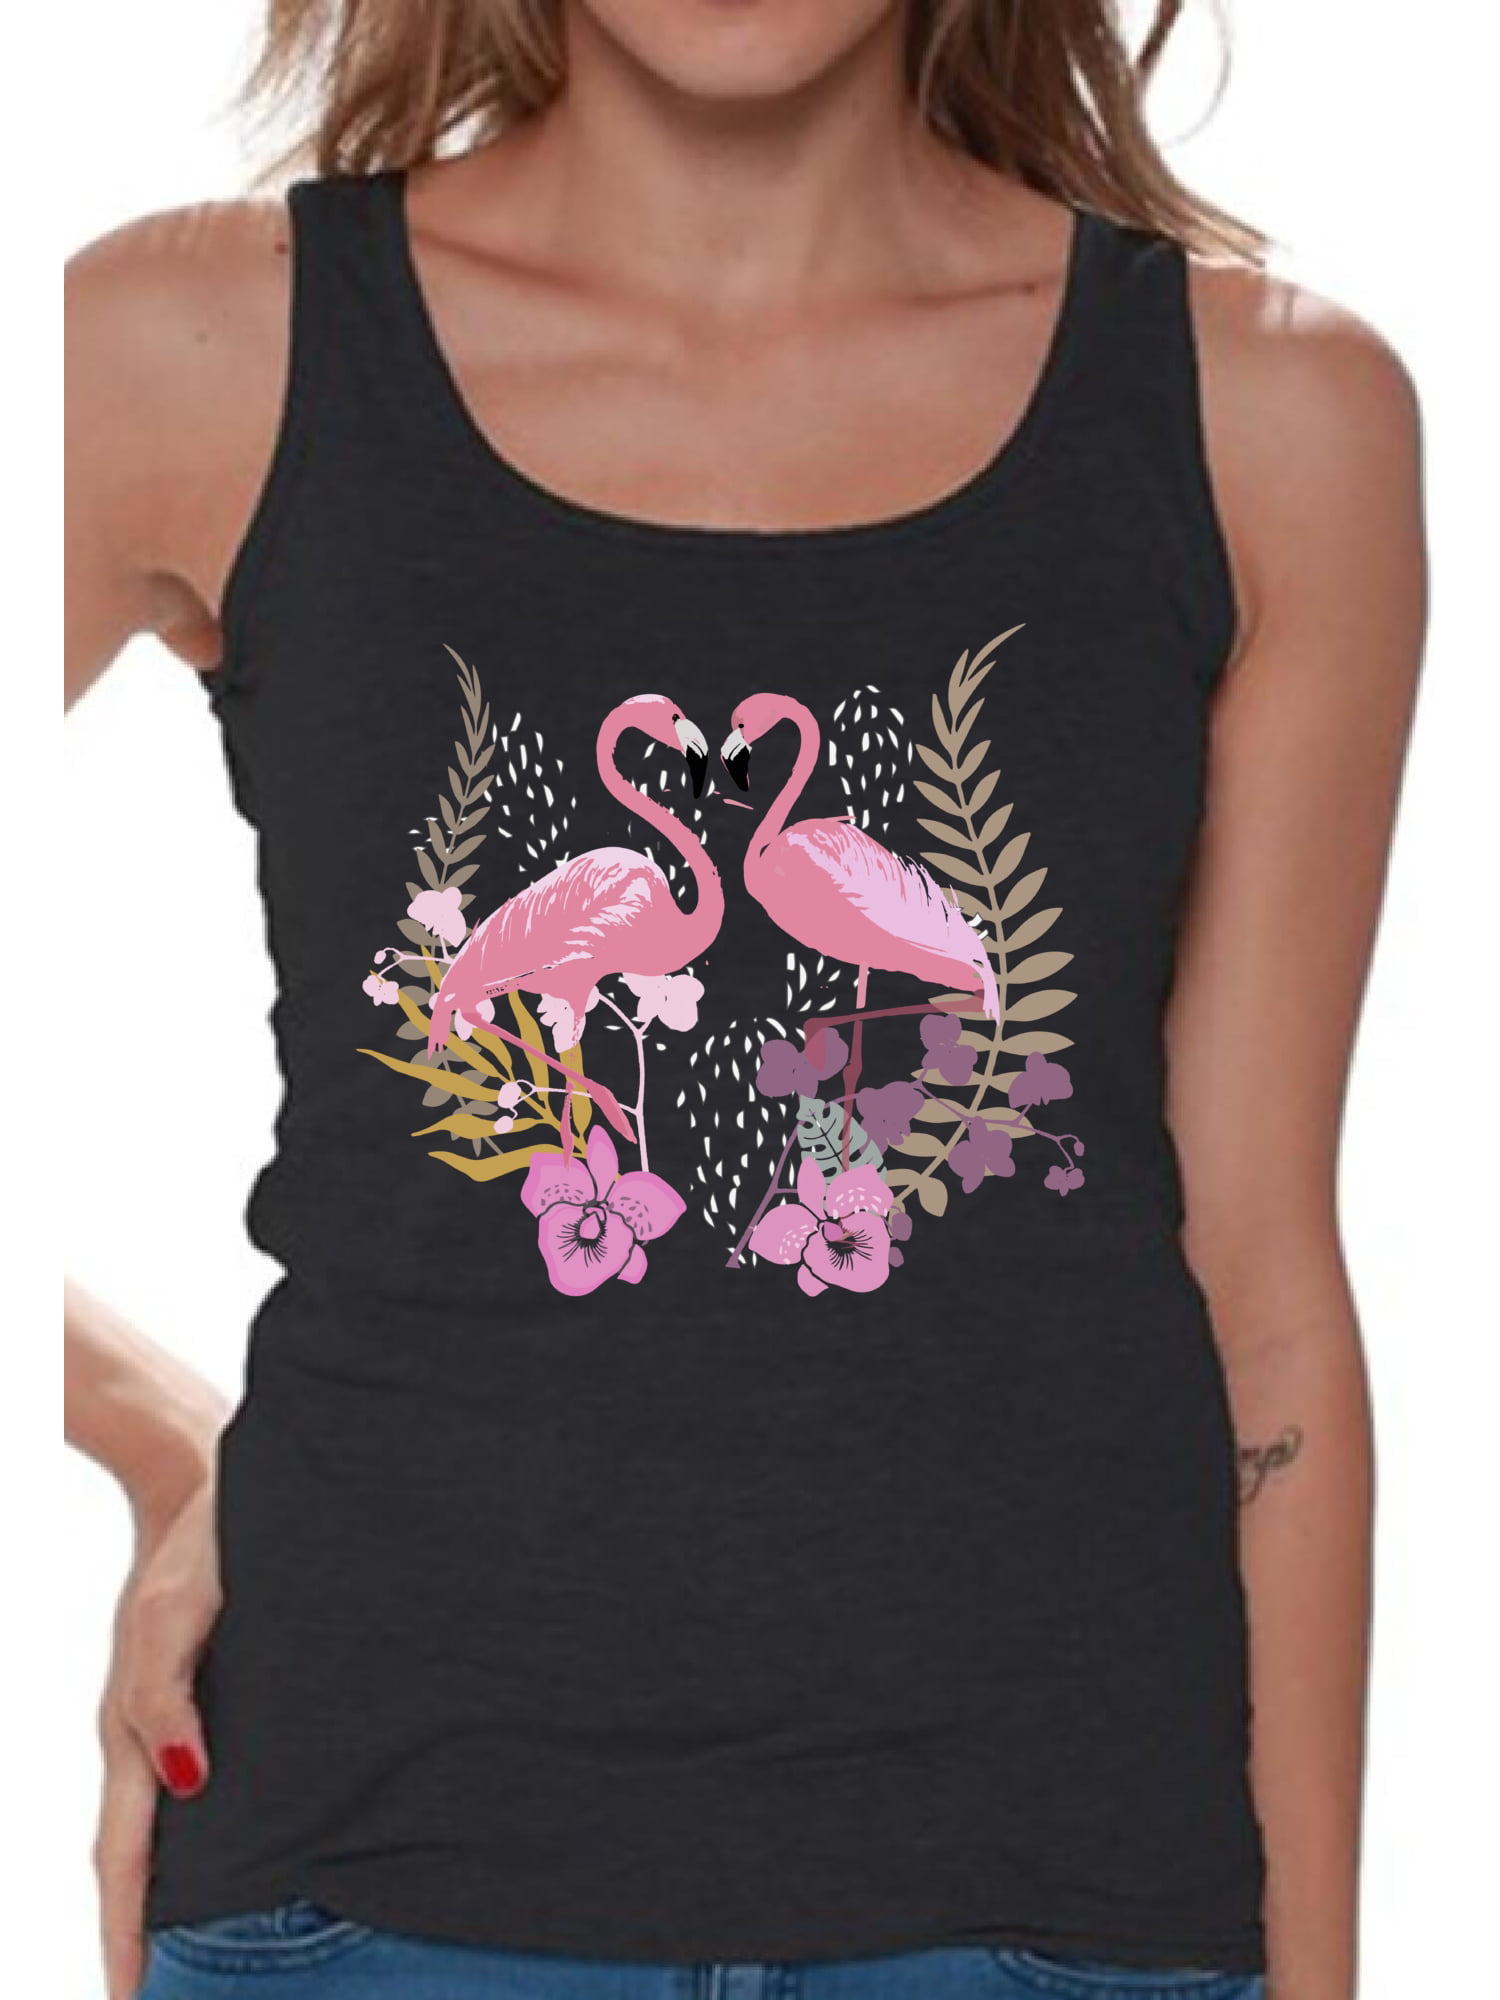 Awkward Styles - Awkward Styles Flamingo Love Tank Top T-Shirt for Her ...